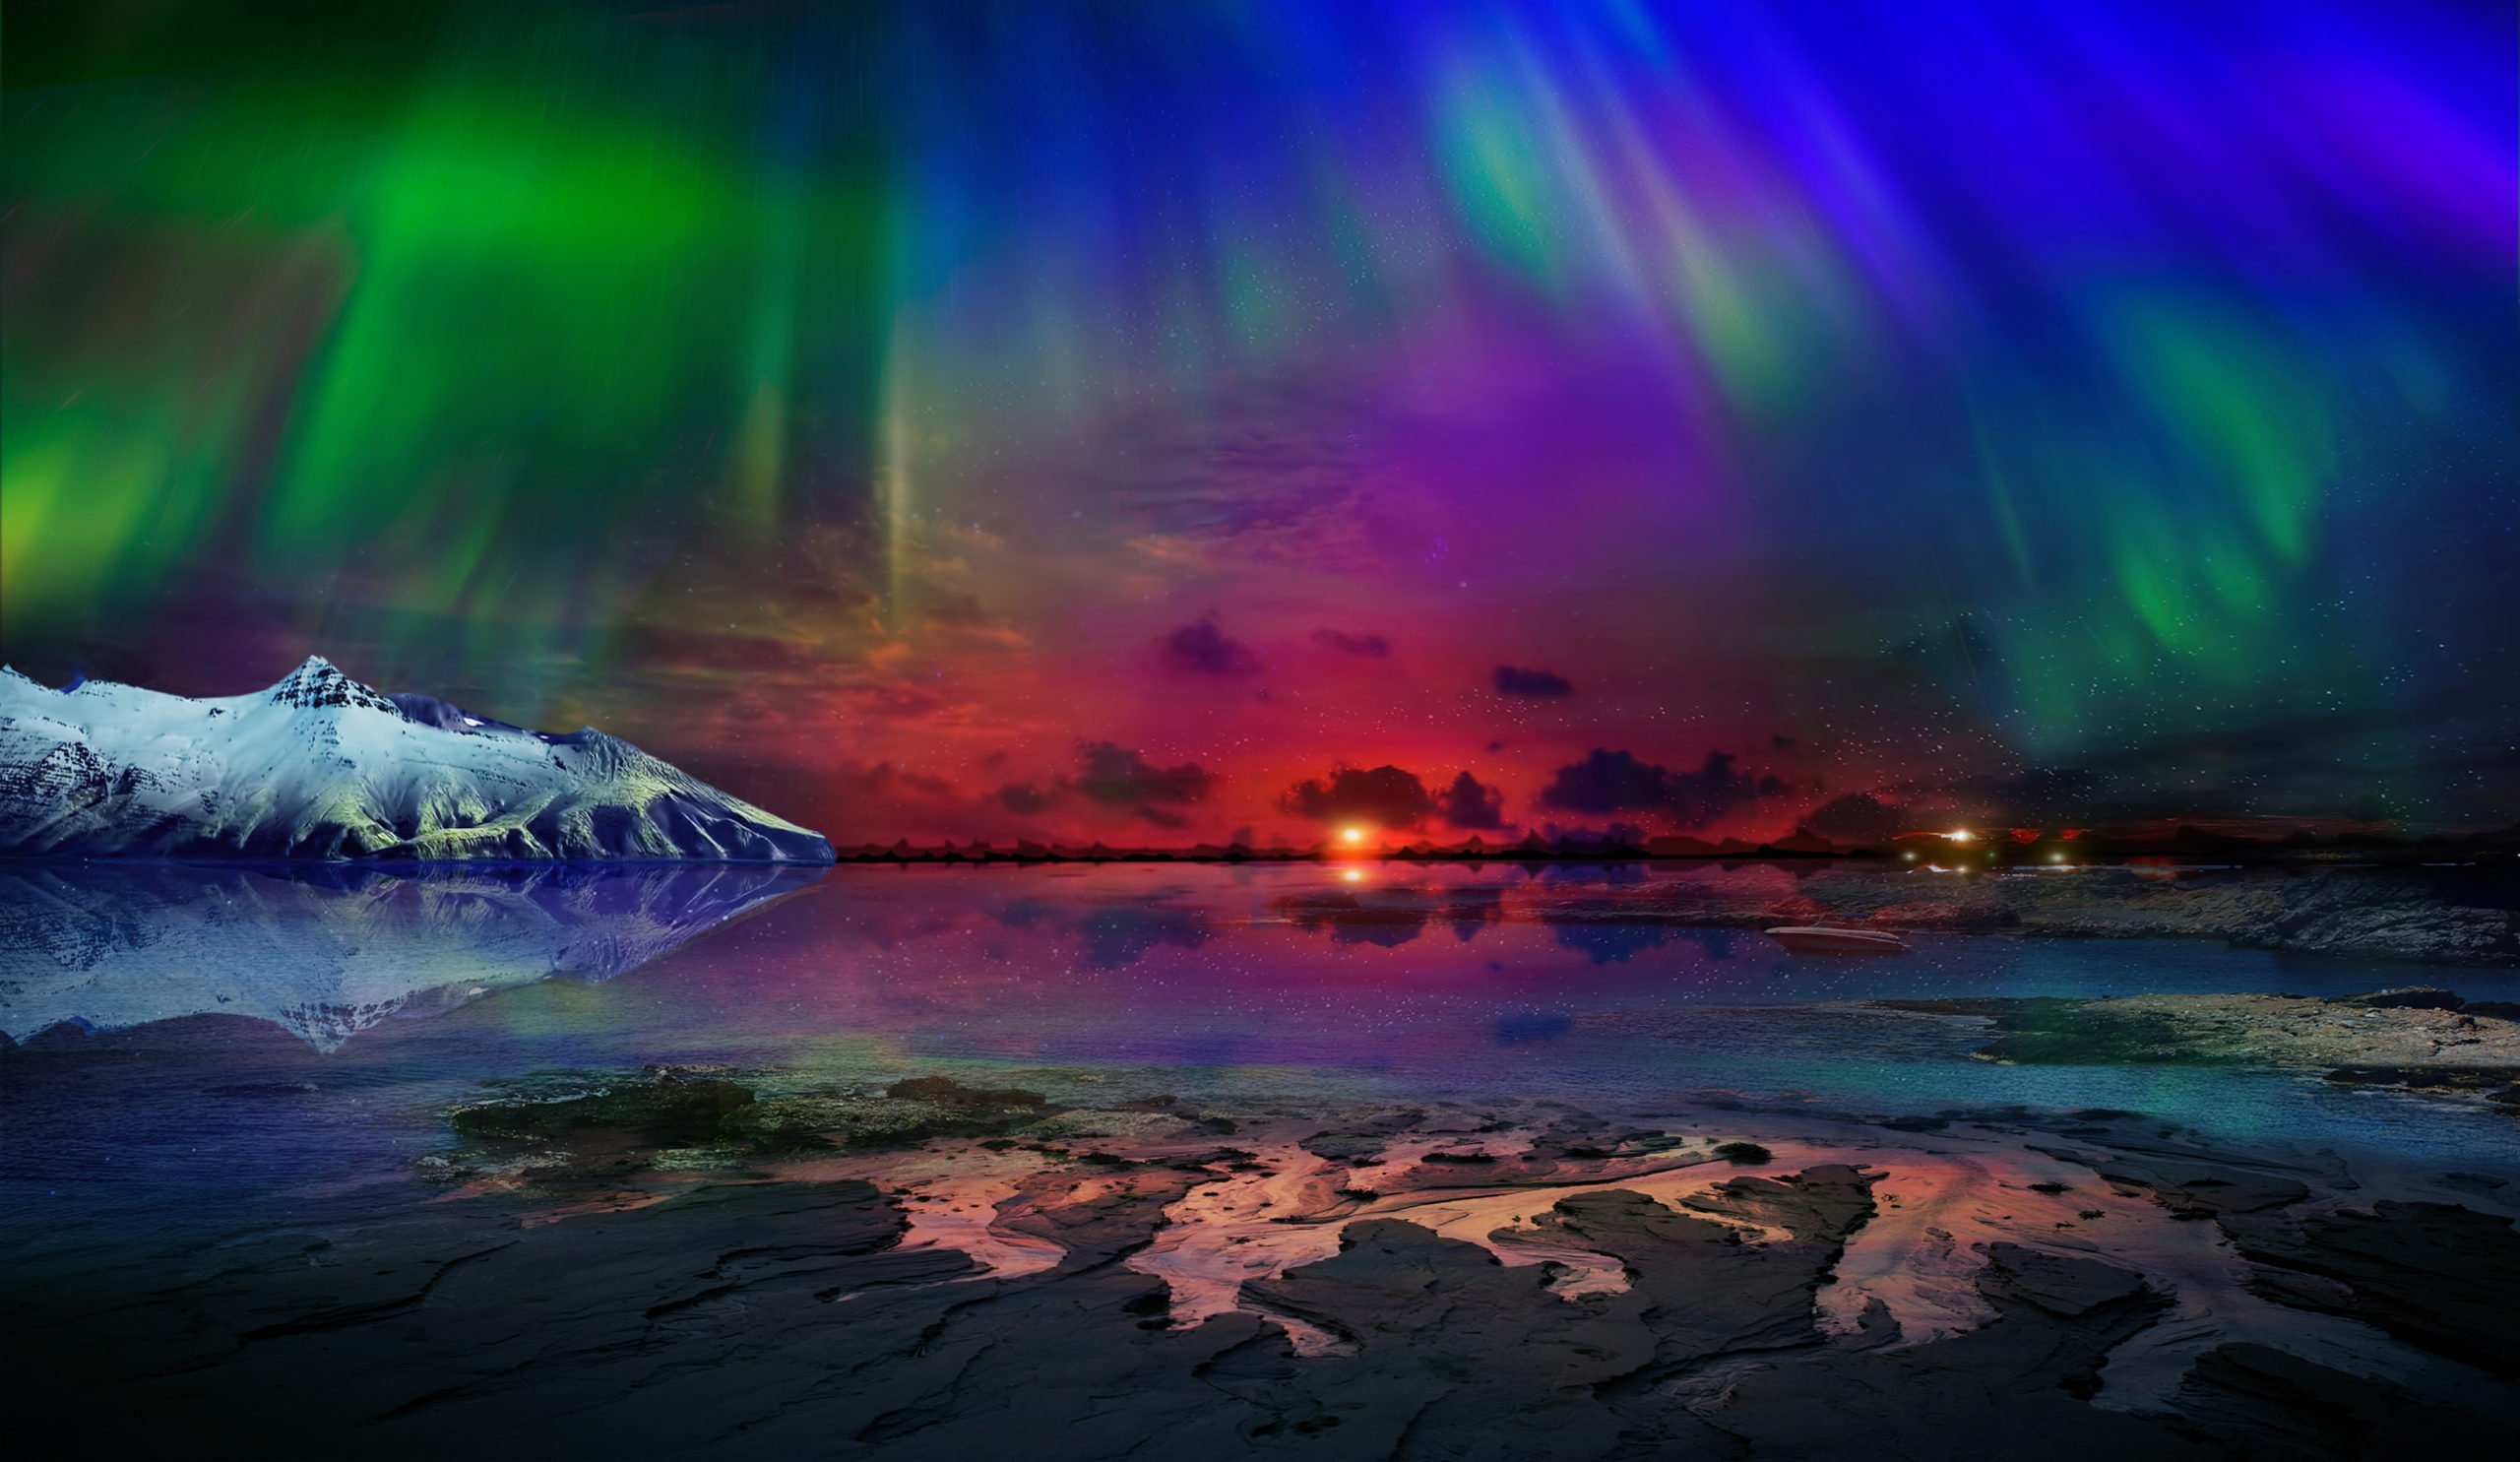 The Northern Lights in Alaska - By Krivosheev Vitaly